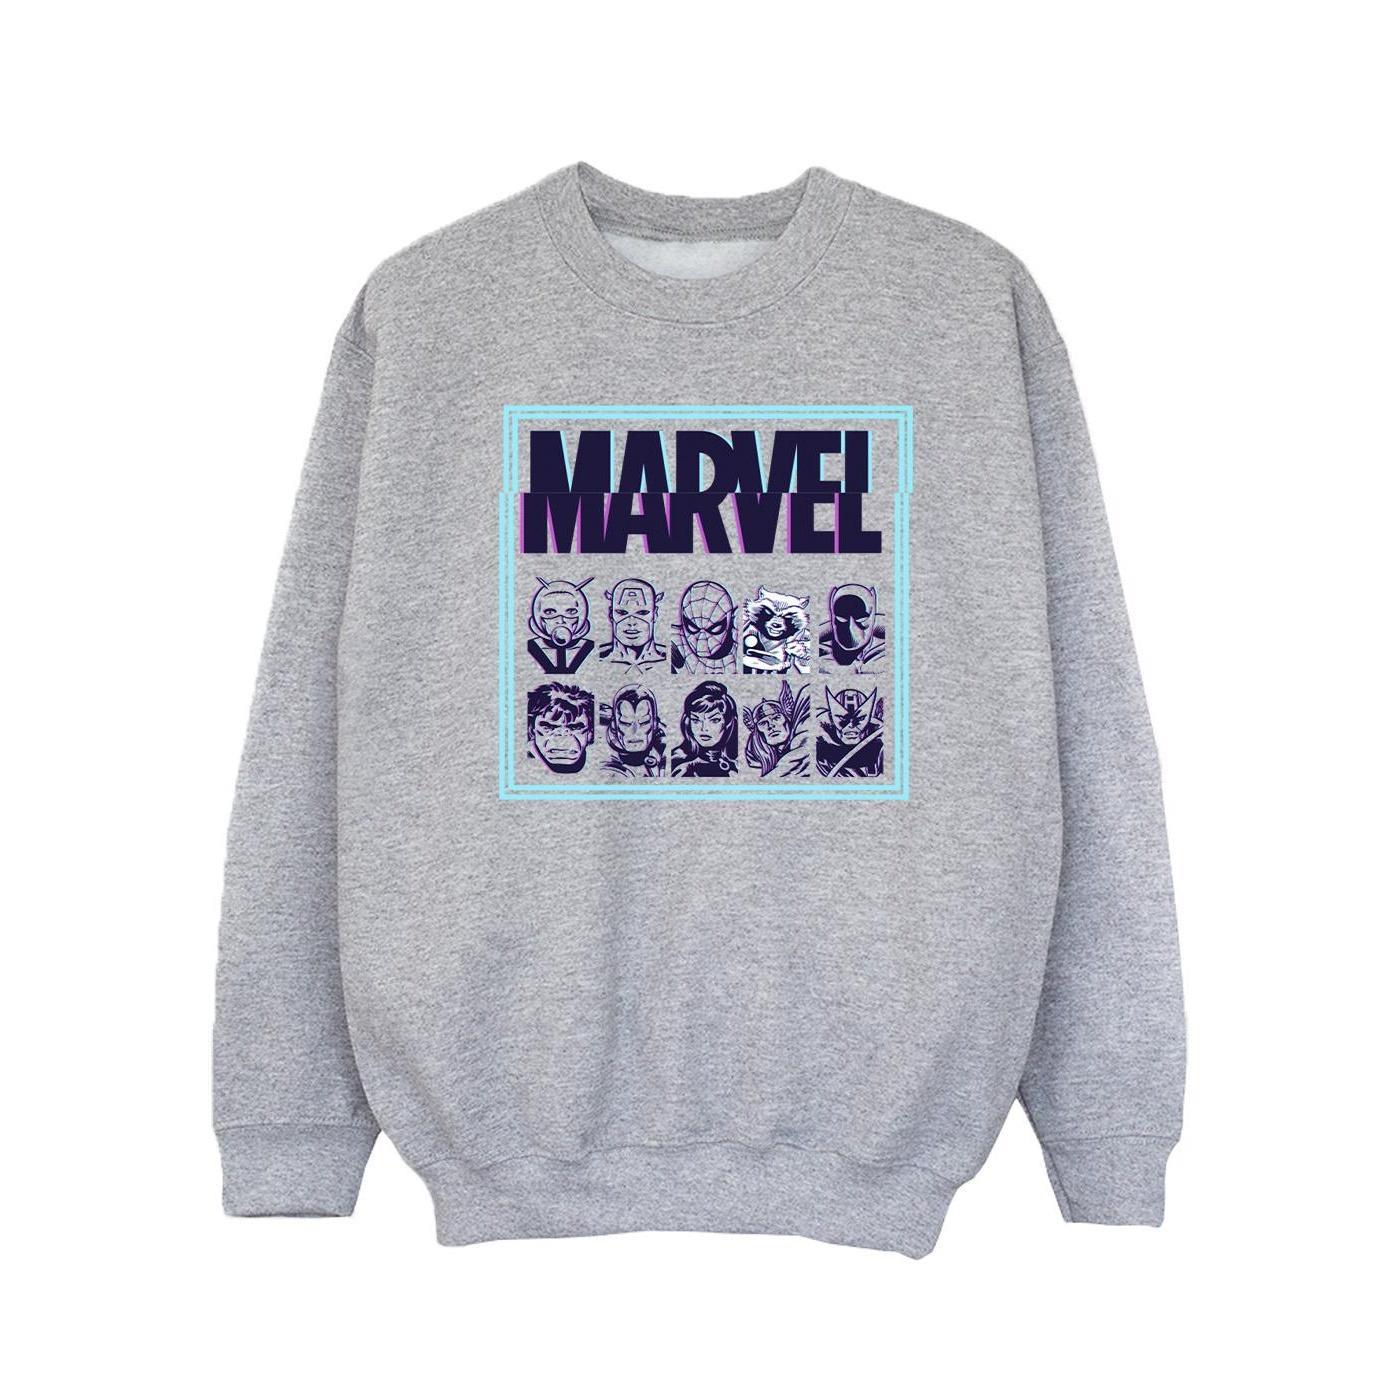 Marvel Girls Comics Glitch Sweatshirt (Sports Grey) (5-6 Years)